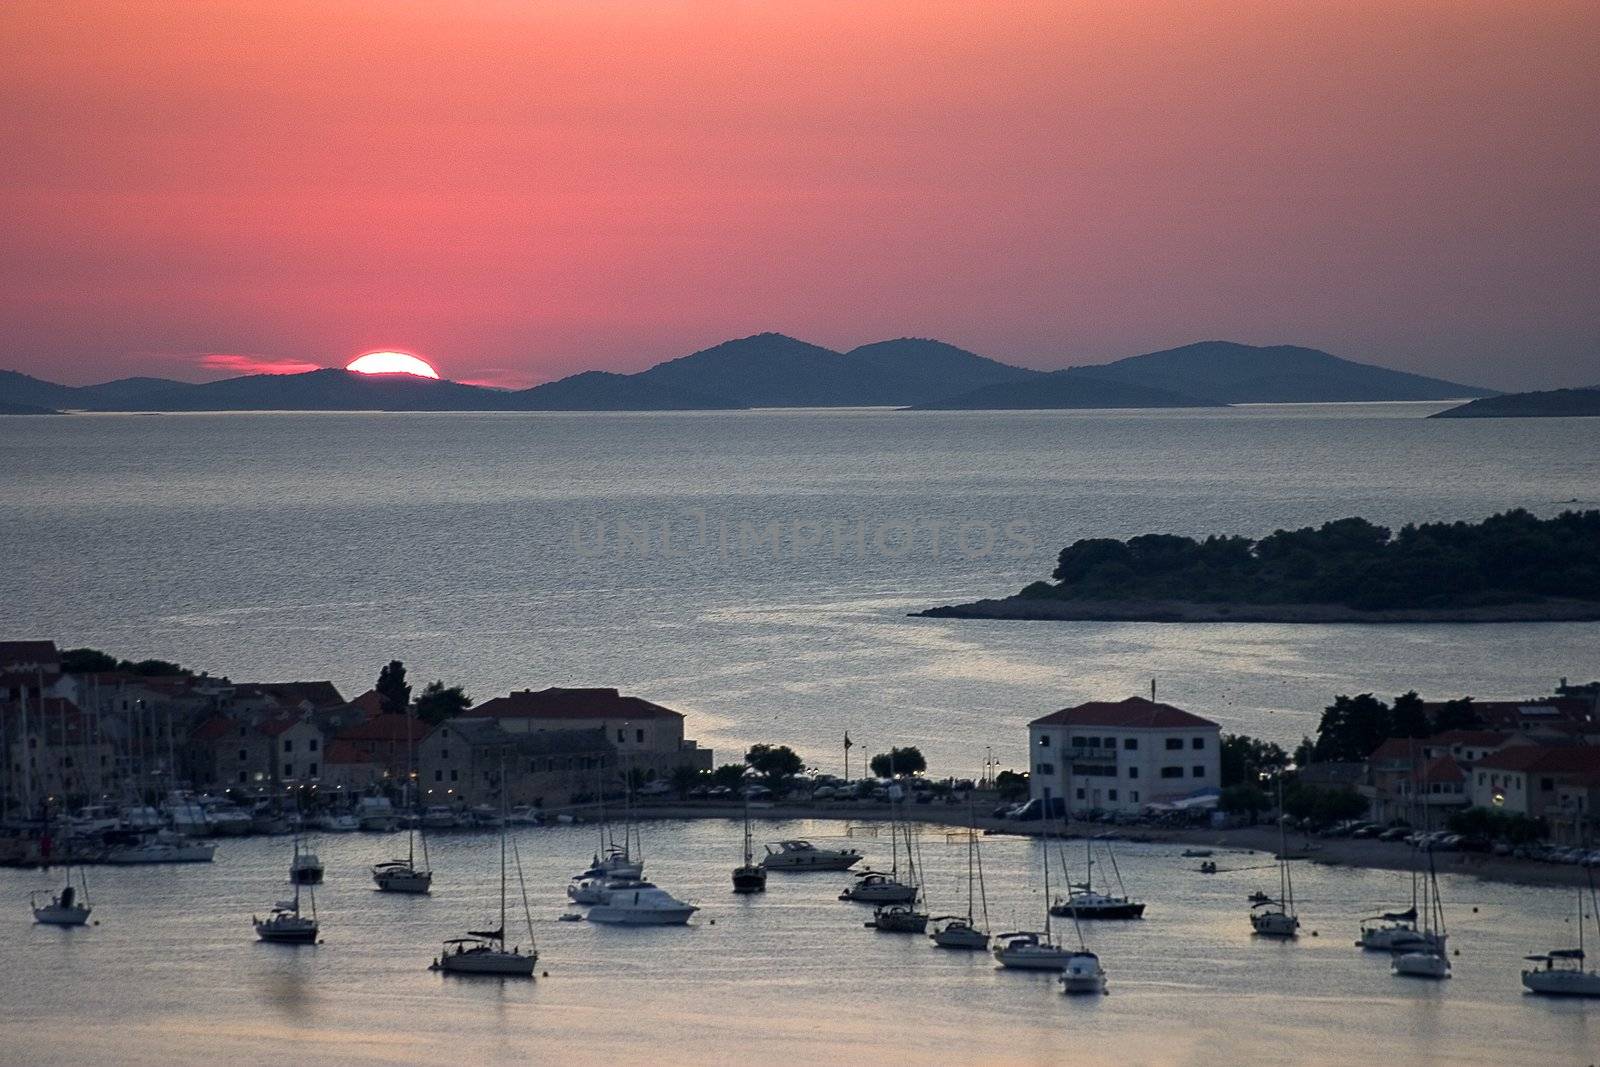 the beauty of Croatia, die Schönheit von Kroatien